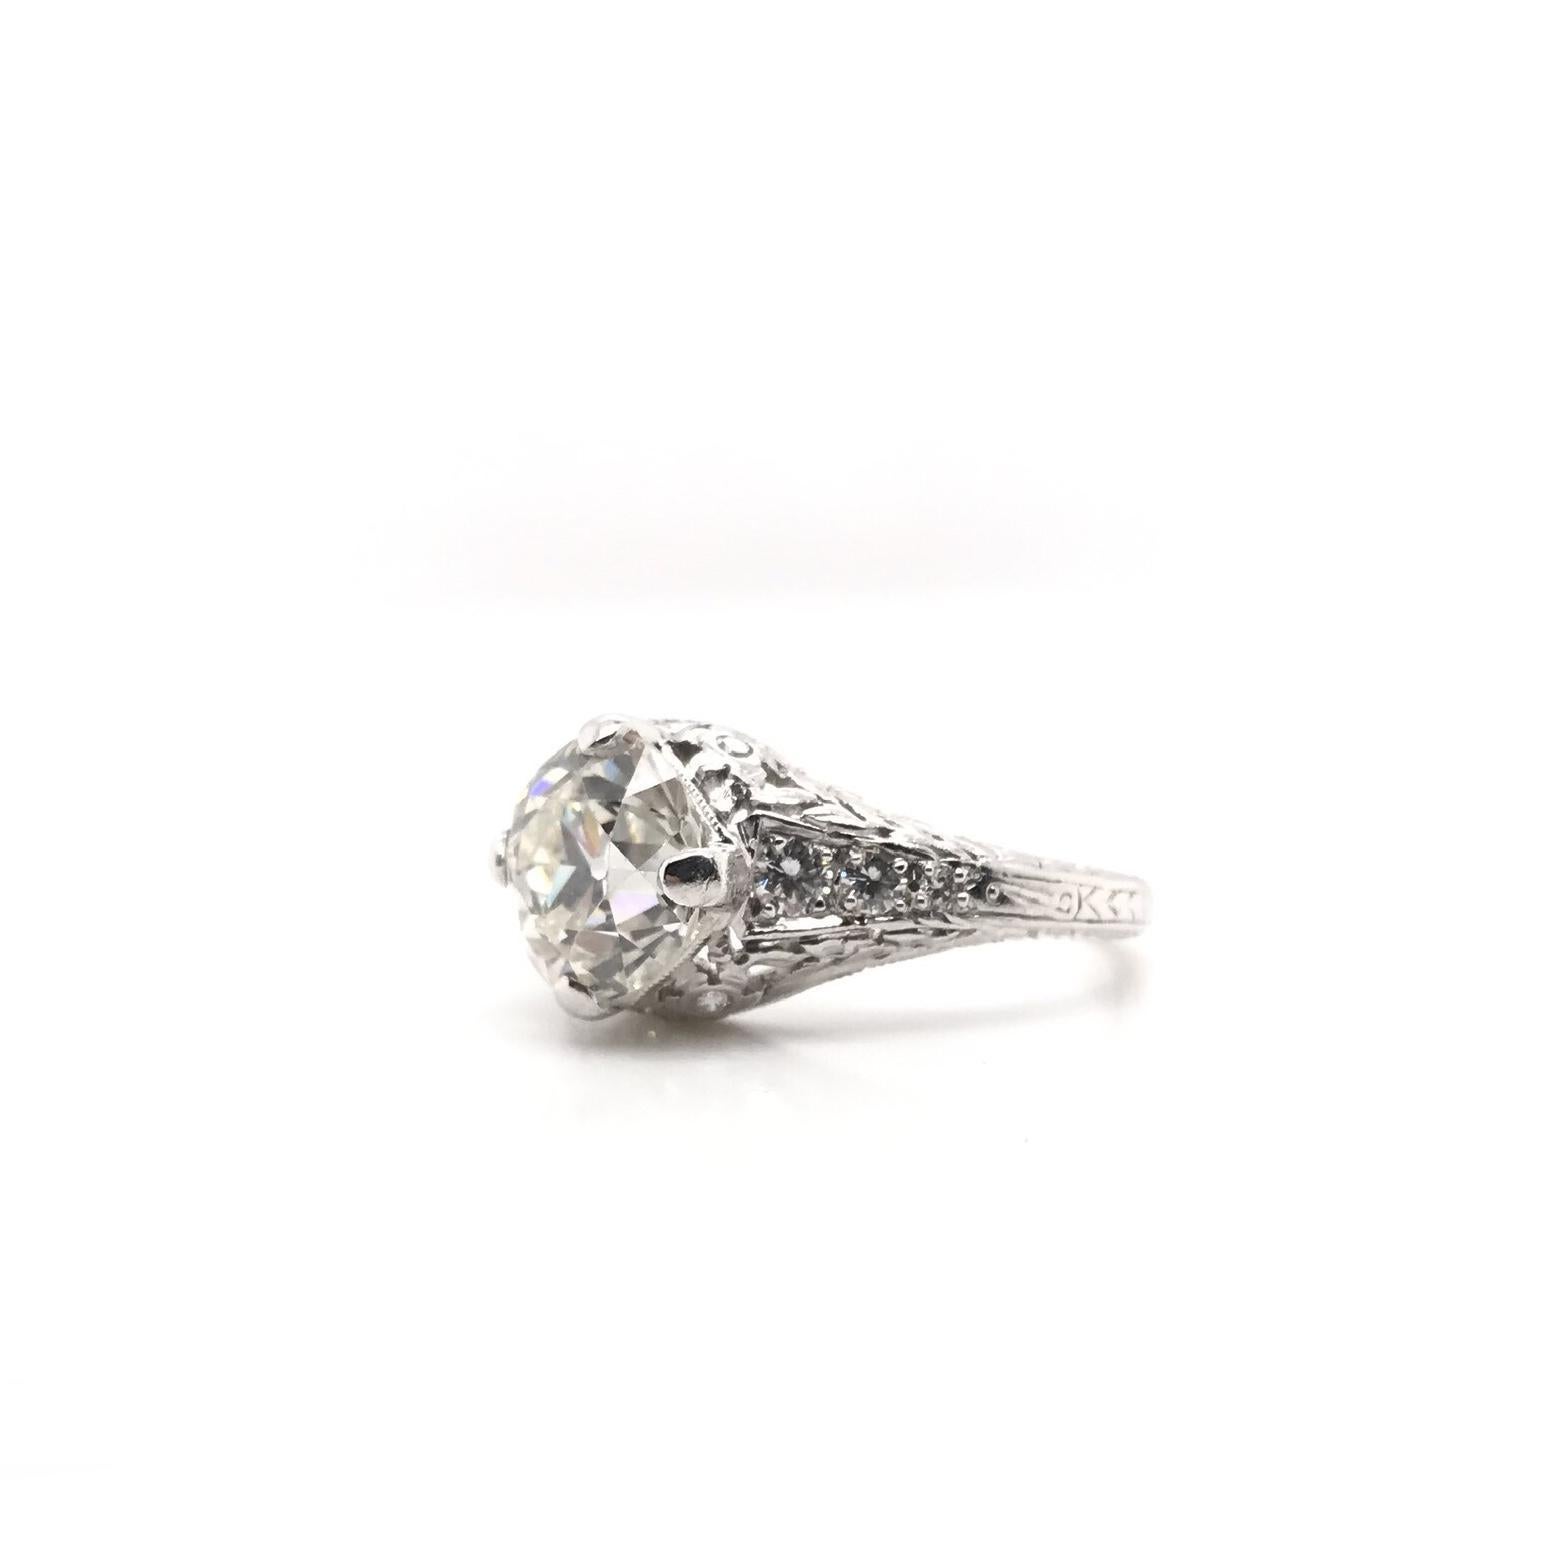 Women's Antique Inspired 2.75 Carat Diamond Filigree Ring